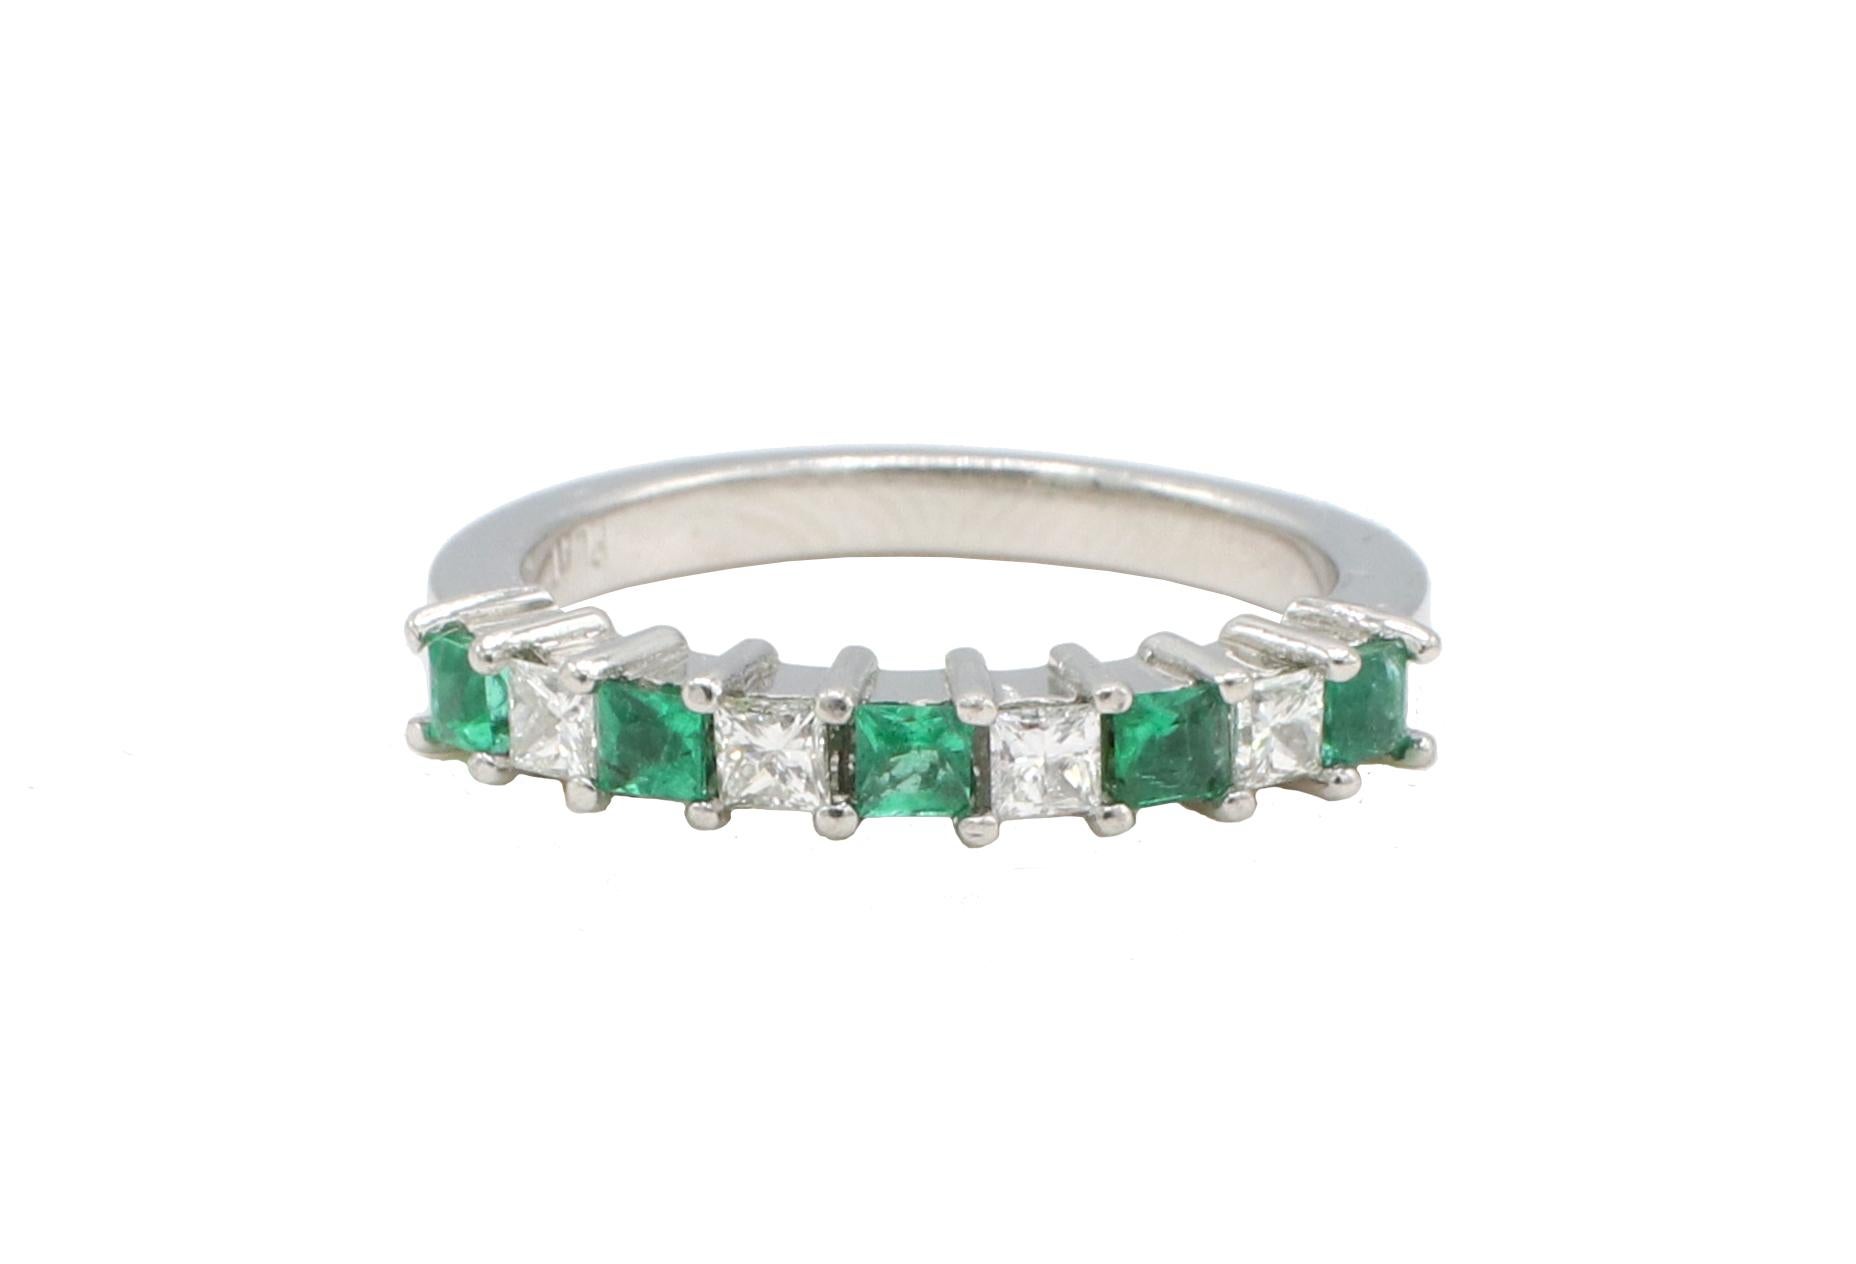 Platinum Green Emerald & Natural Diamond Half Band Ring 
Metal: Platinum
Weight: 5.11 grams
Diamonds: Approx. .20 CTW G VS princess cut natural diamonds
Emeralds: Approx. .25 CTW square emeralds 
Width: 2.3mm
Size: 6 (US)
